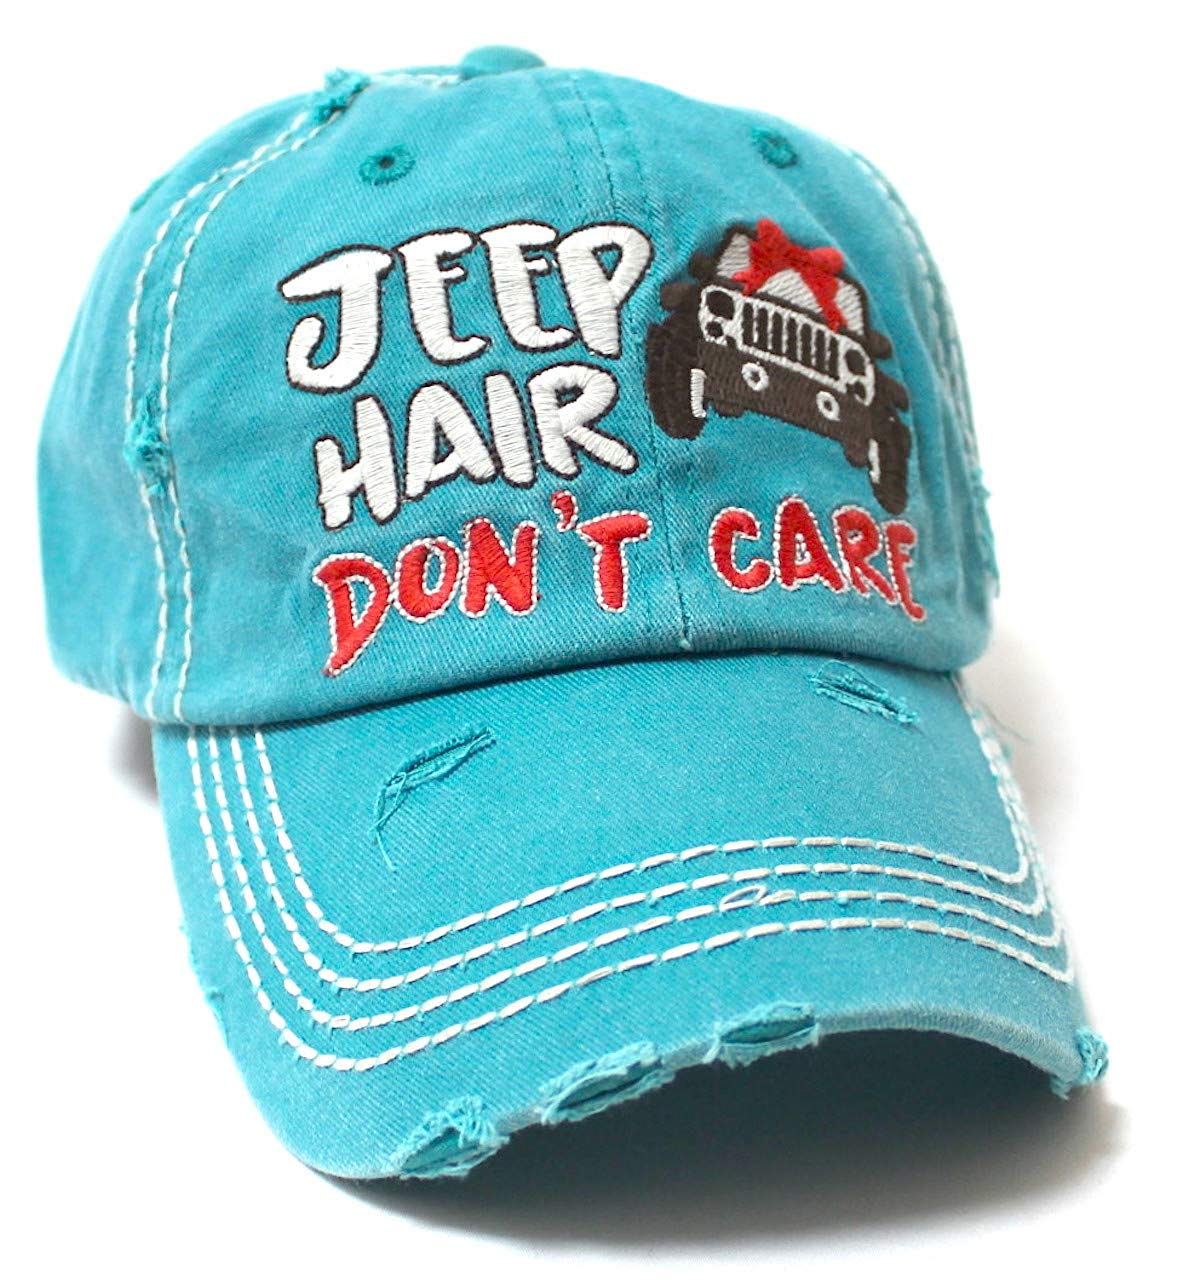 Ladies Bow-Tie Jeep Hair Don't Care Monogram Cheer Baseball Hat, Turquoise Blue - Caps 'N Vintage 